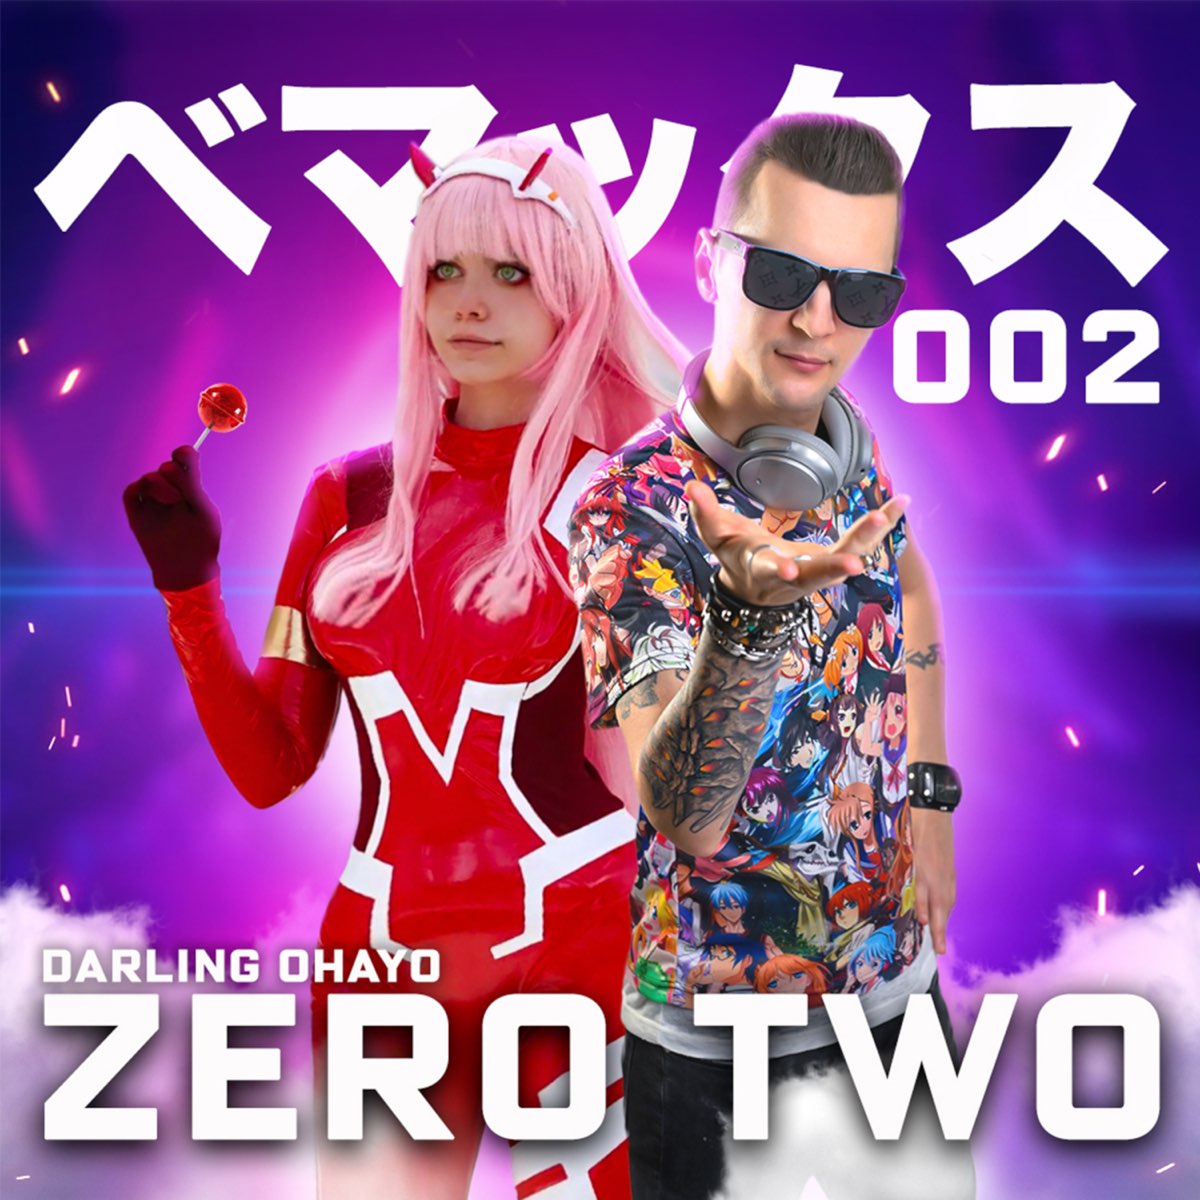 Zero Two (Darling Ohayo) - Single - Album by Bemax - Apple Music